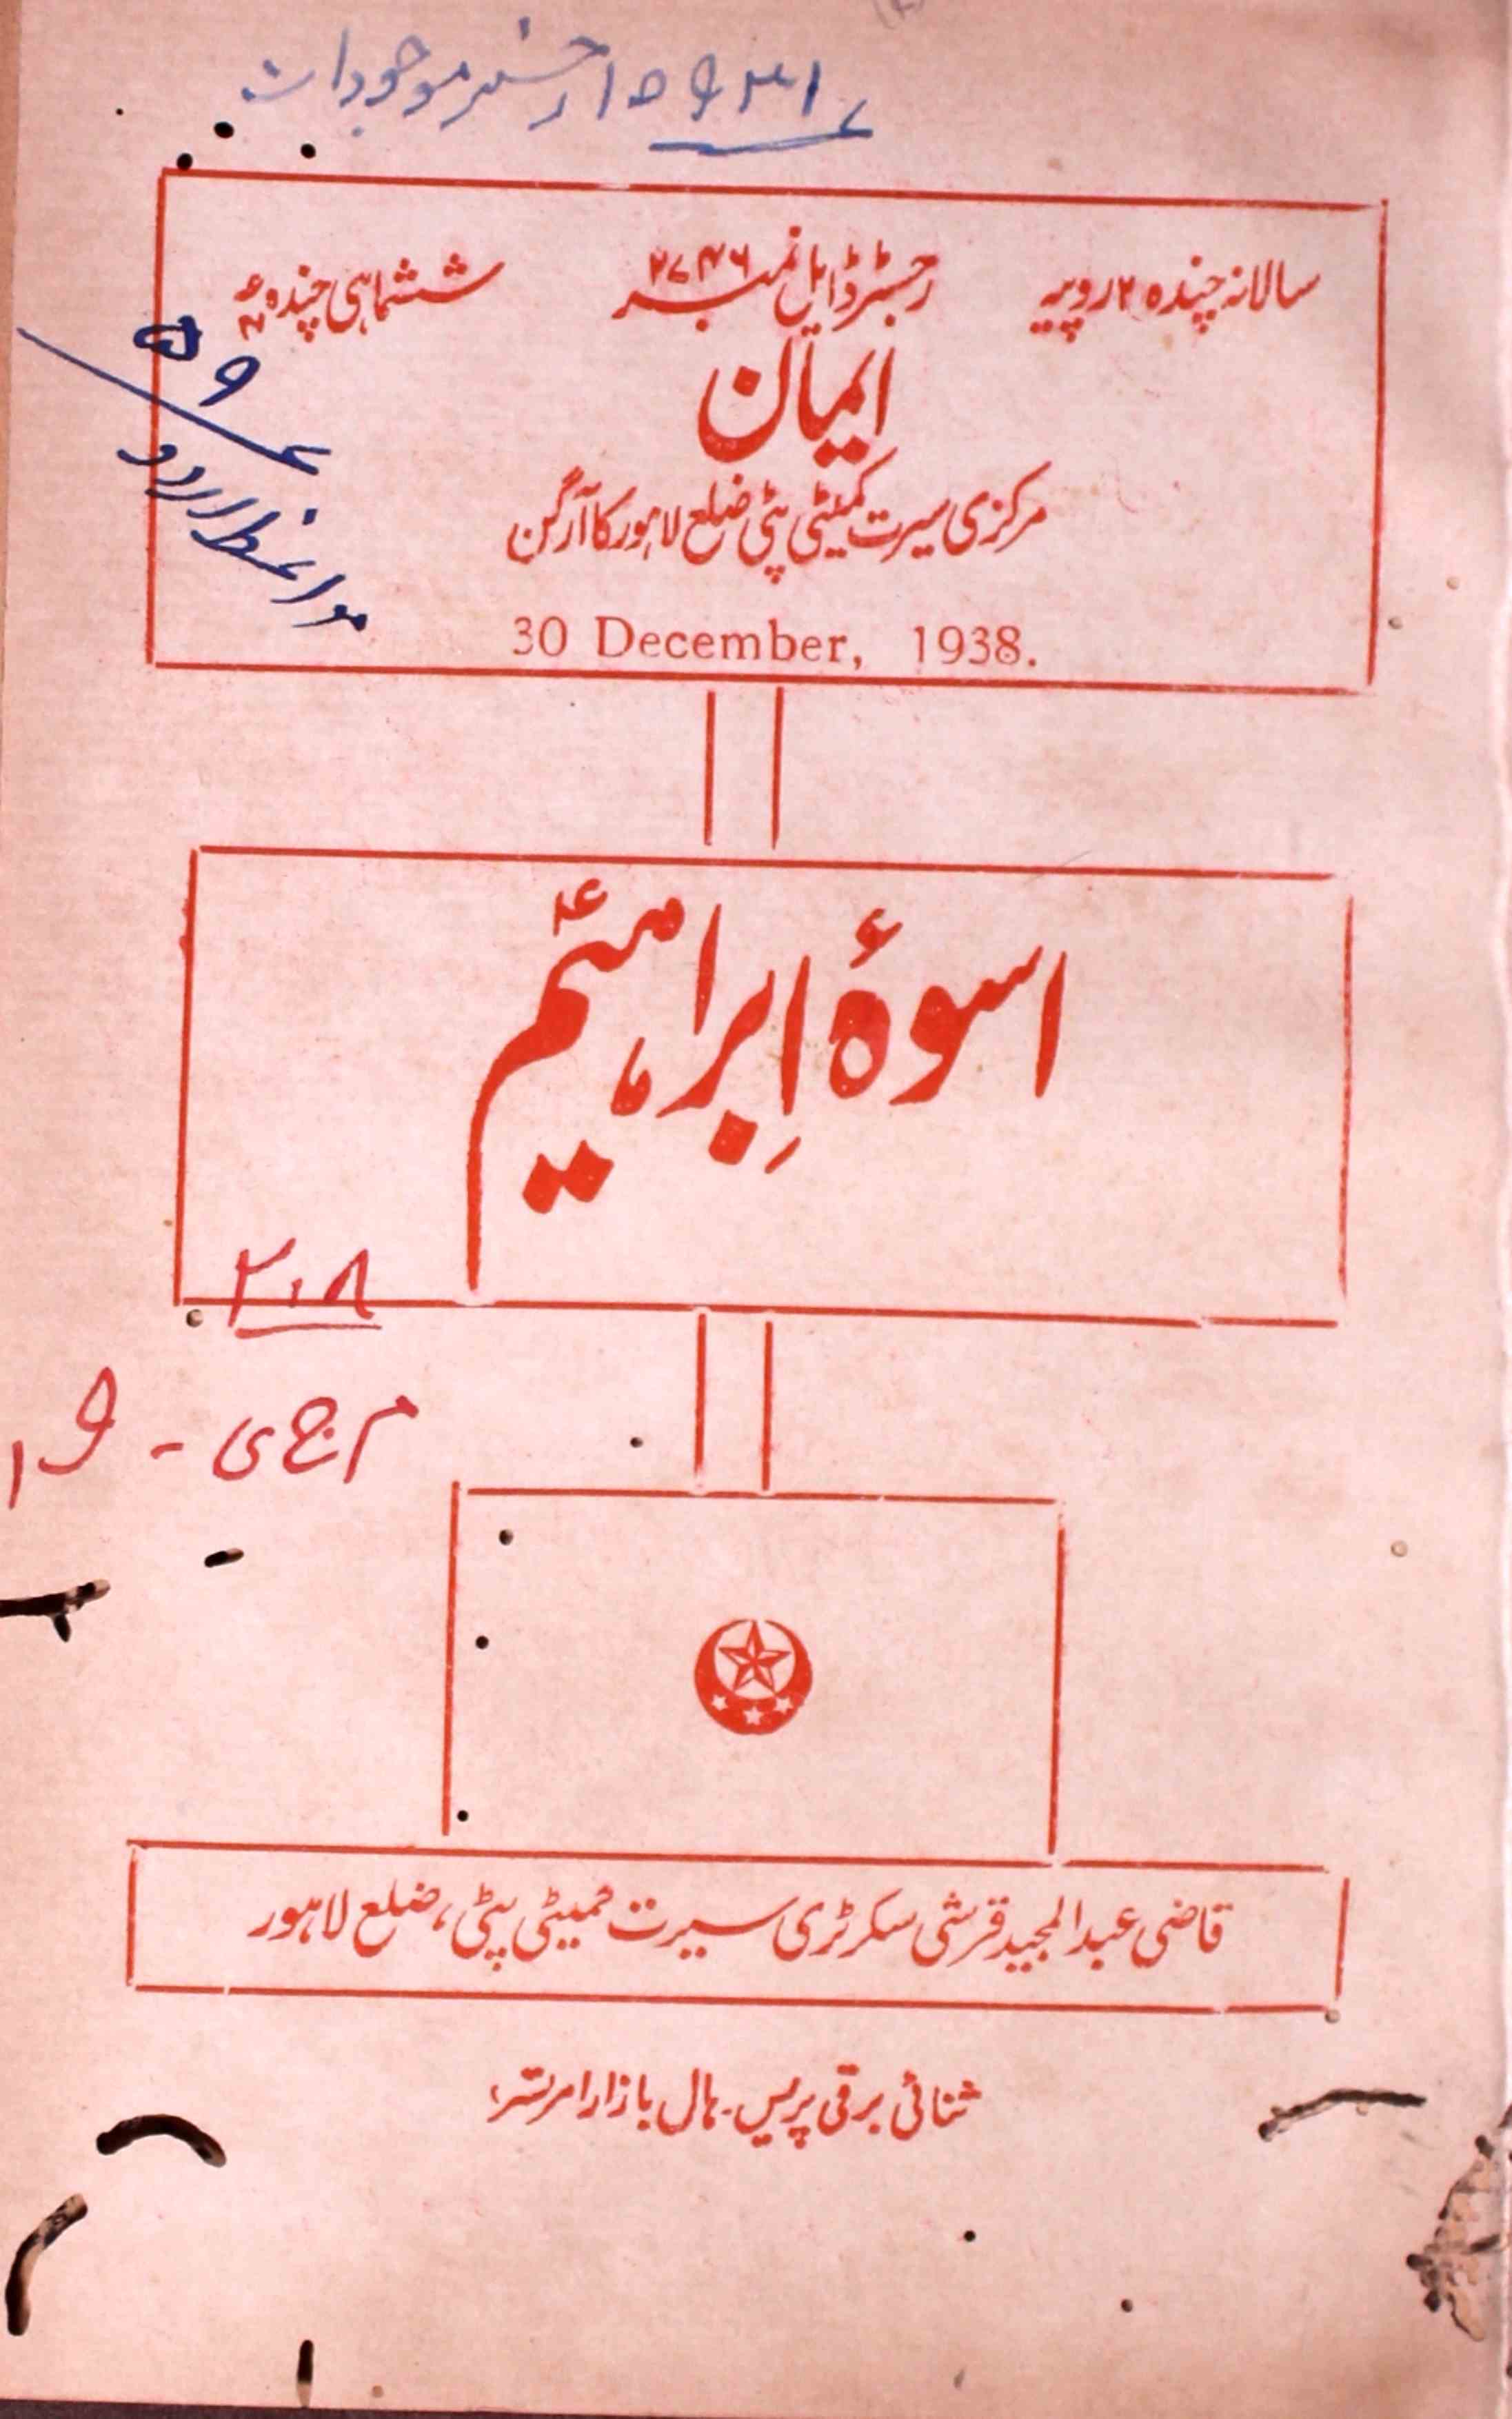 Imaan 30, Dec 1938 Aswah e Ibraheem